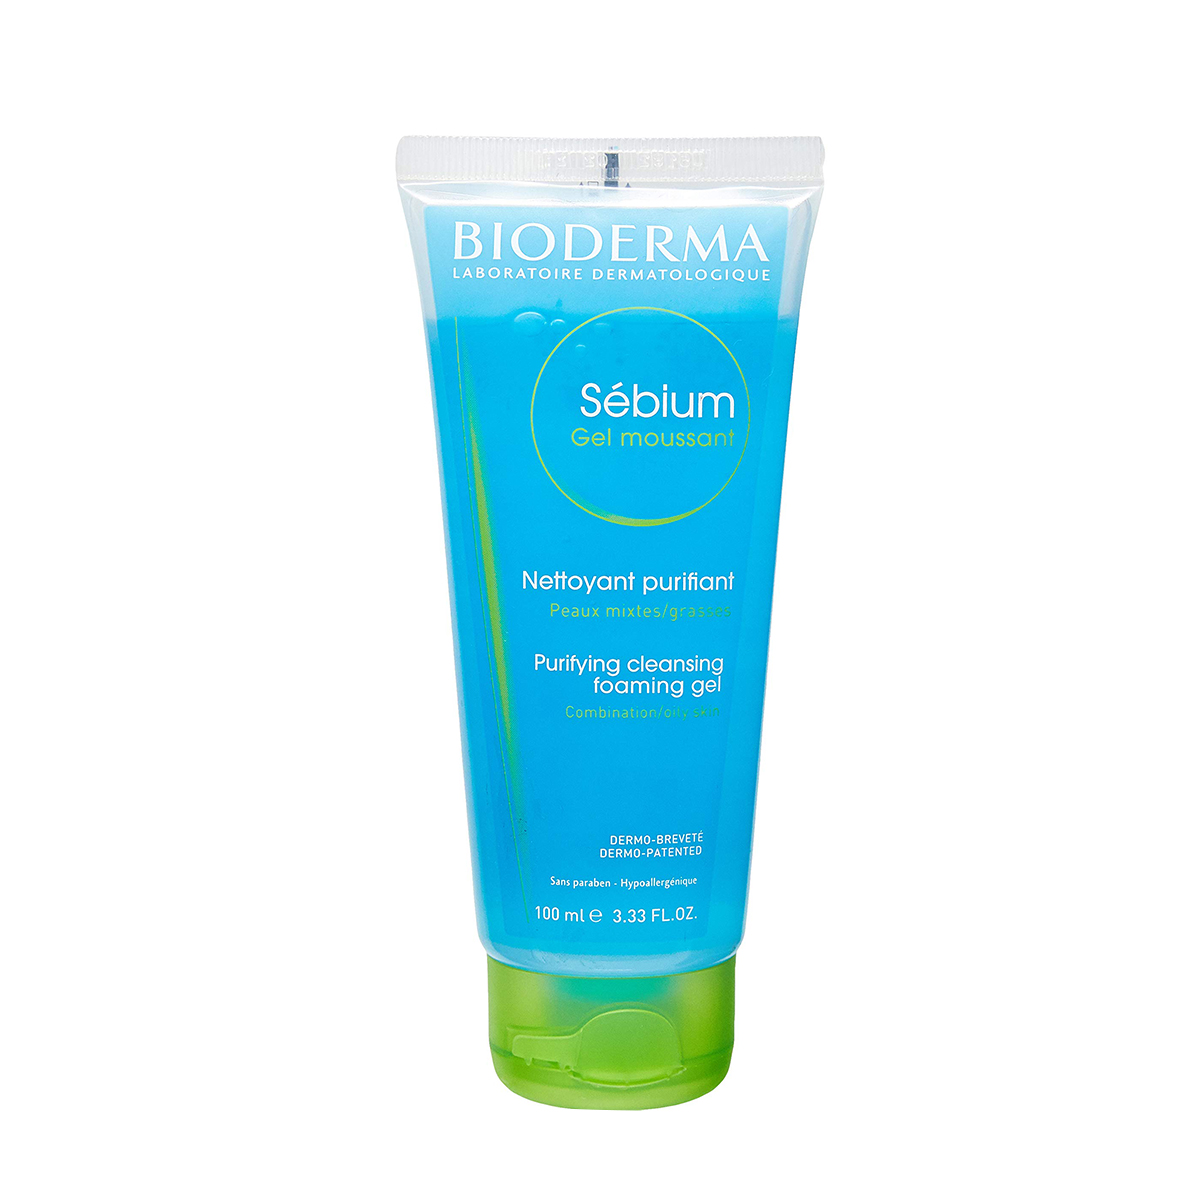 1. Bioderma Sebium Foaming Gel Facial Cleanser for Combination to Oily Skin